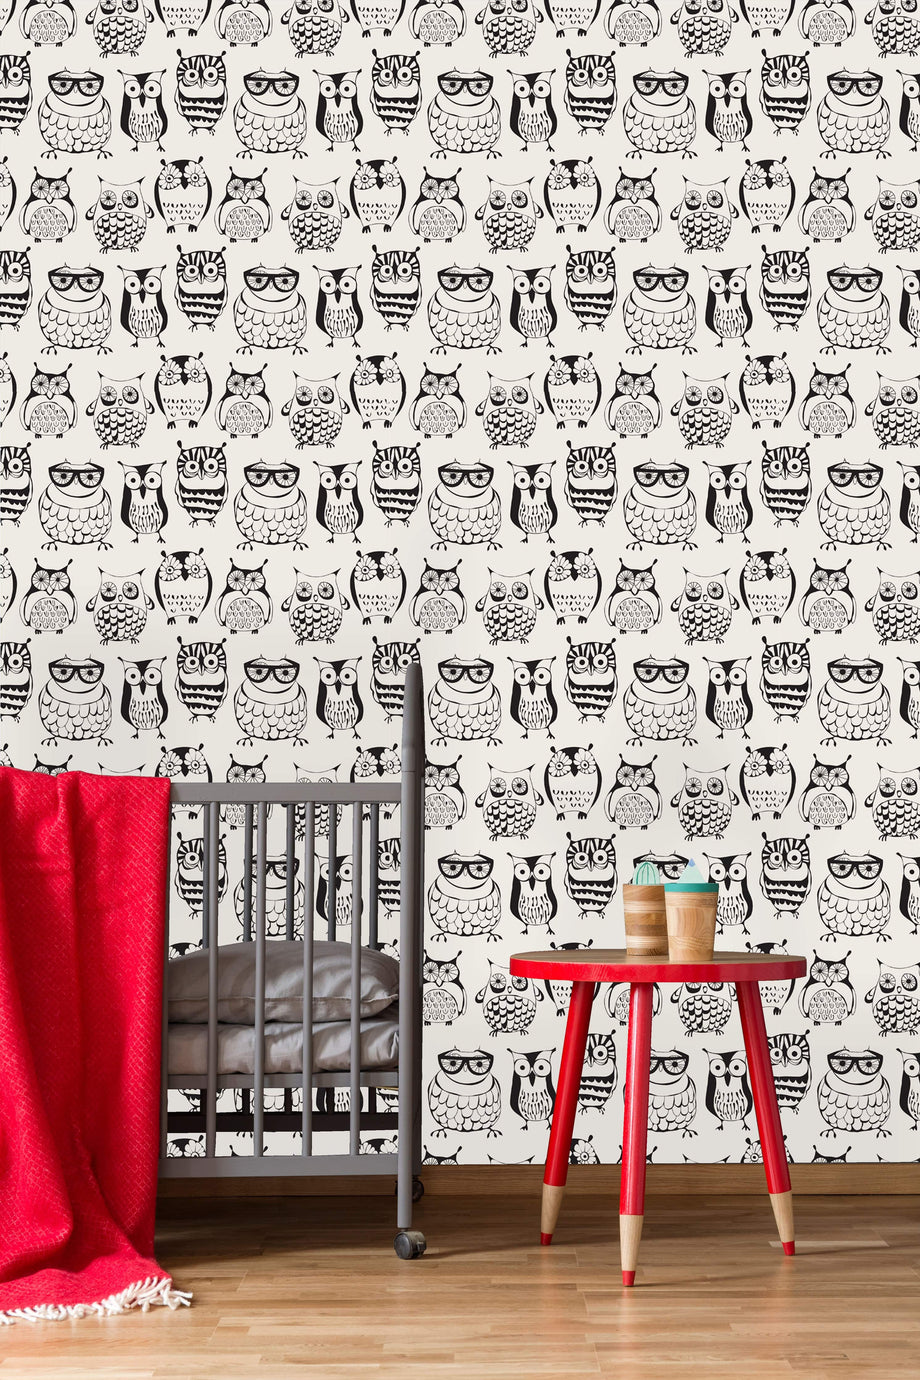 owls wallpaper for kids